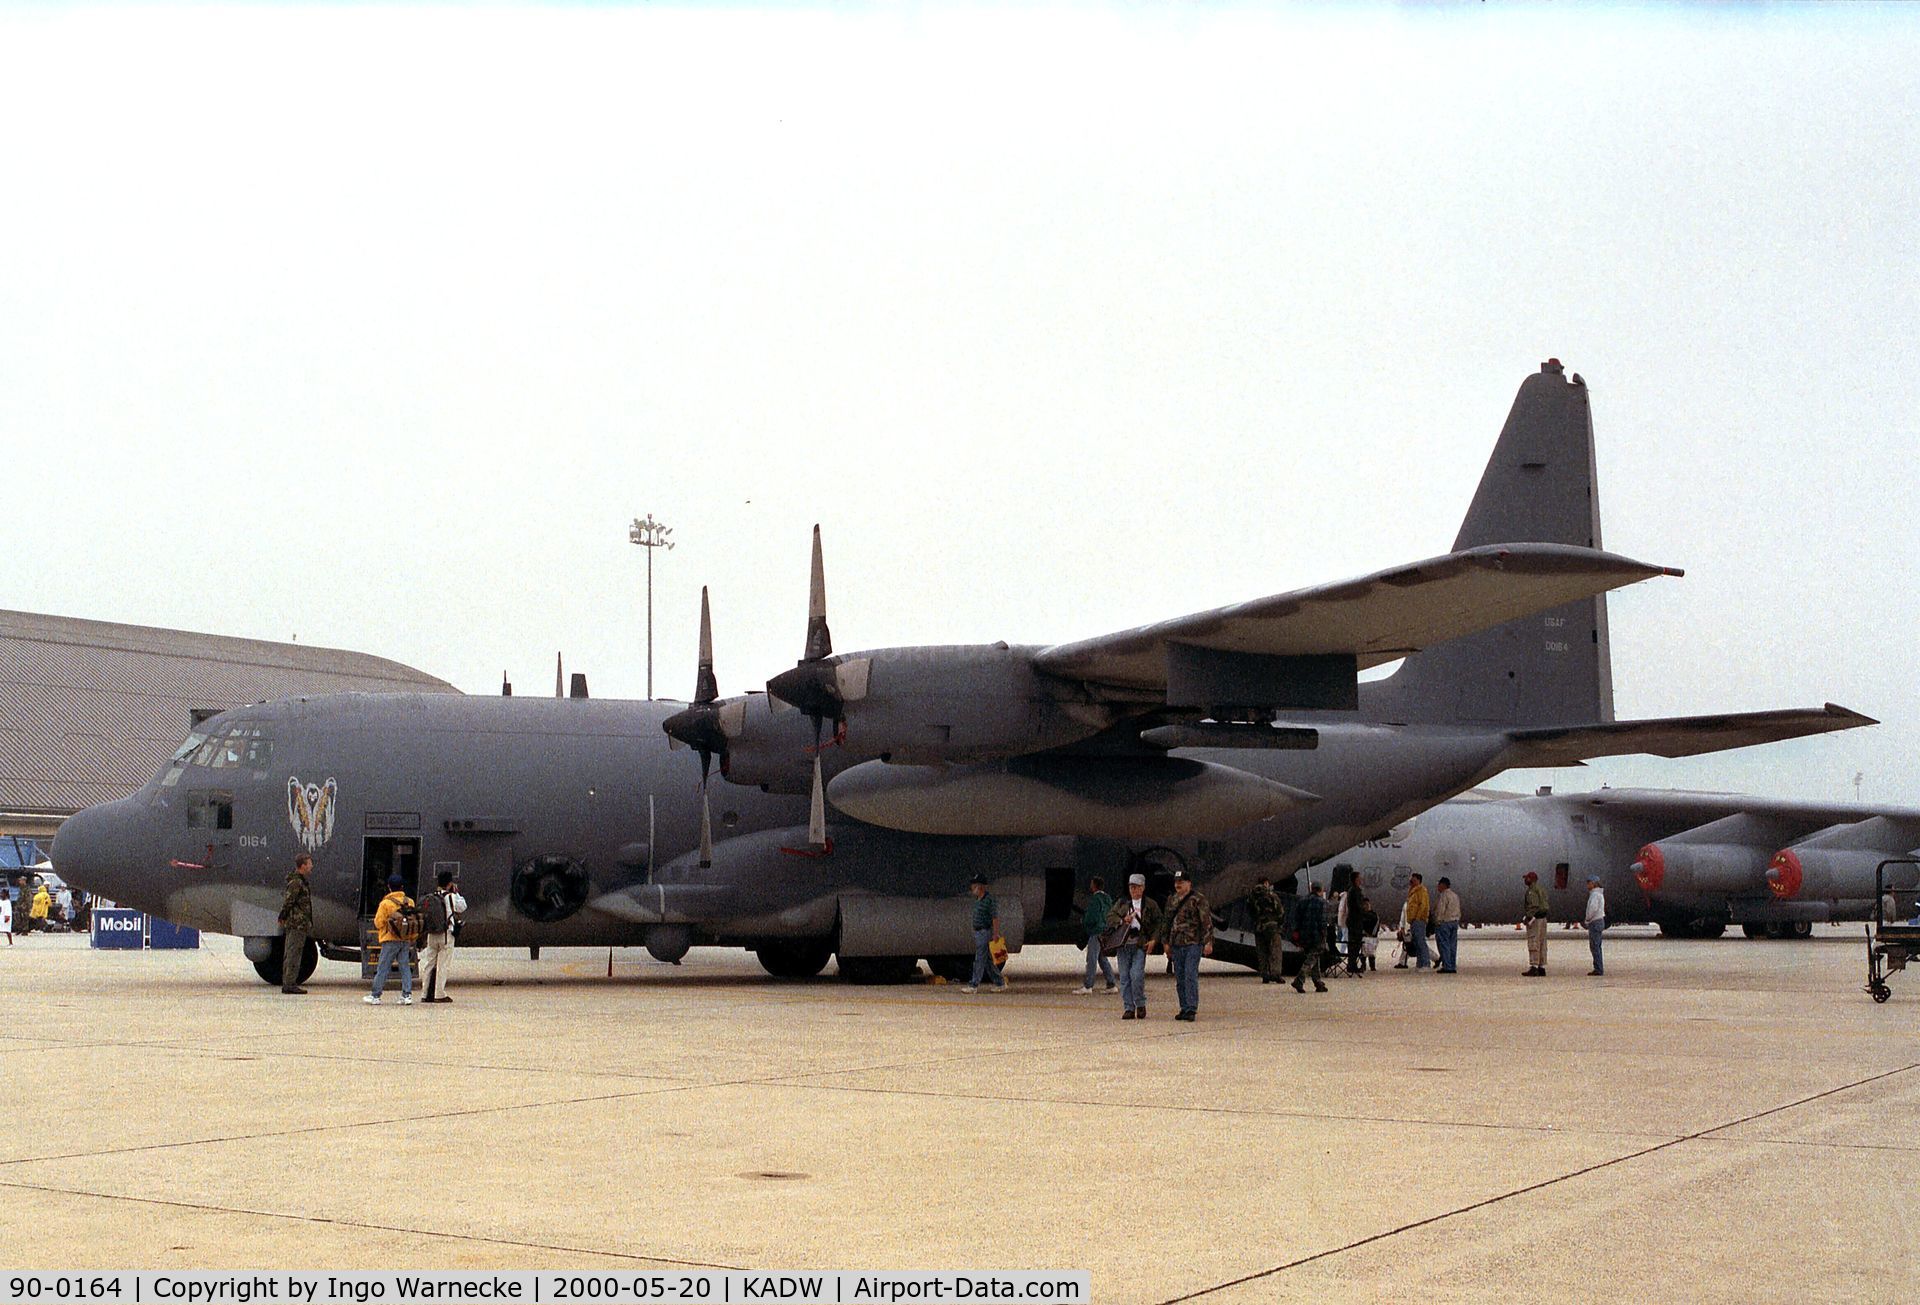 90-0164, 1990 Lockheed AC-130U Spooky II C/N 382C-5257, Lockheed AC-130U Hercules of the USAF at Andrews AFB during Armed Forces Day